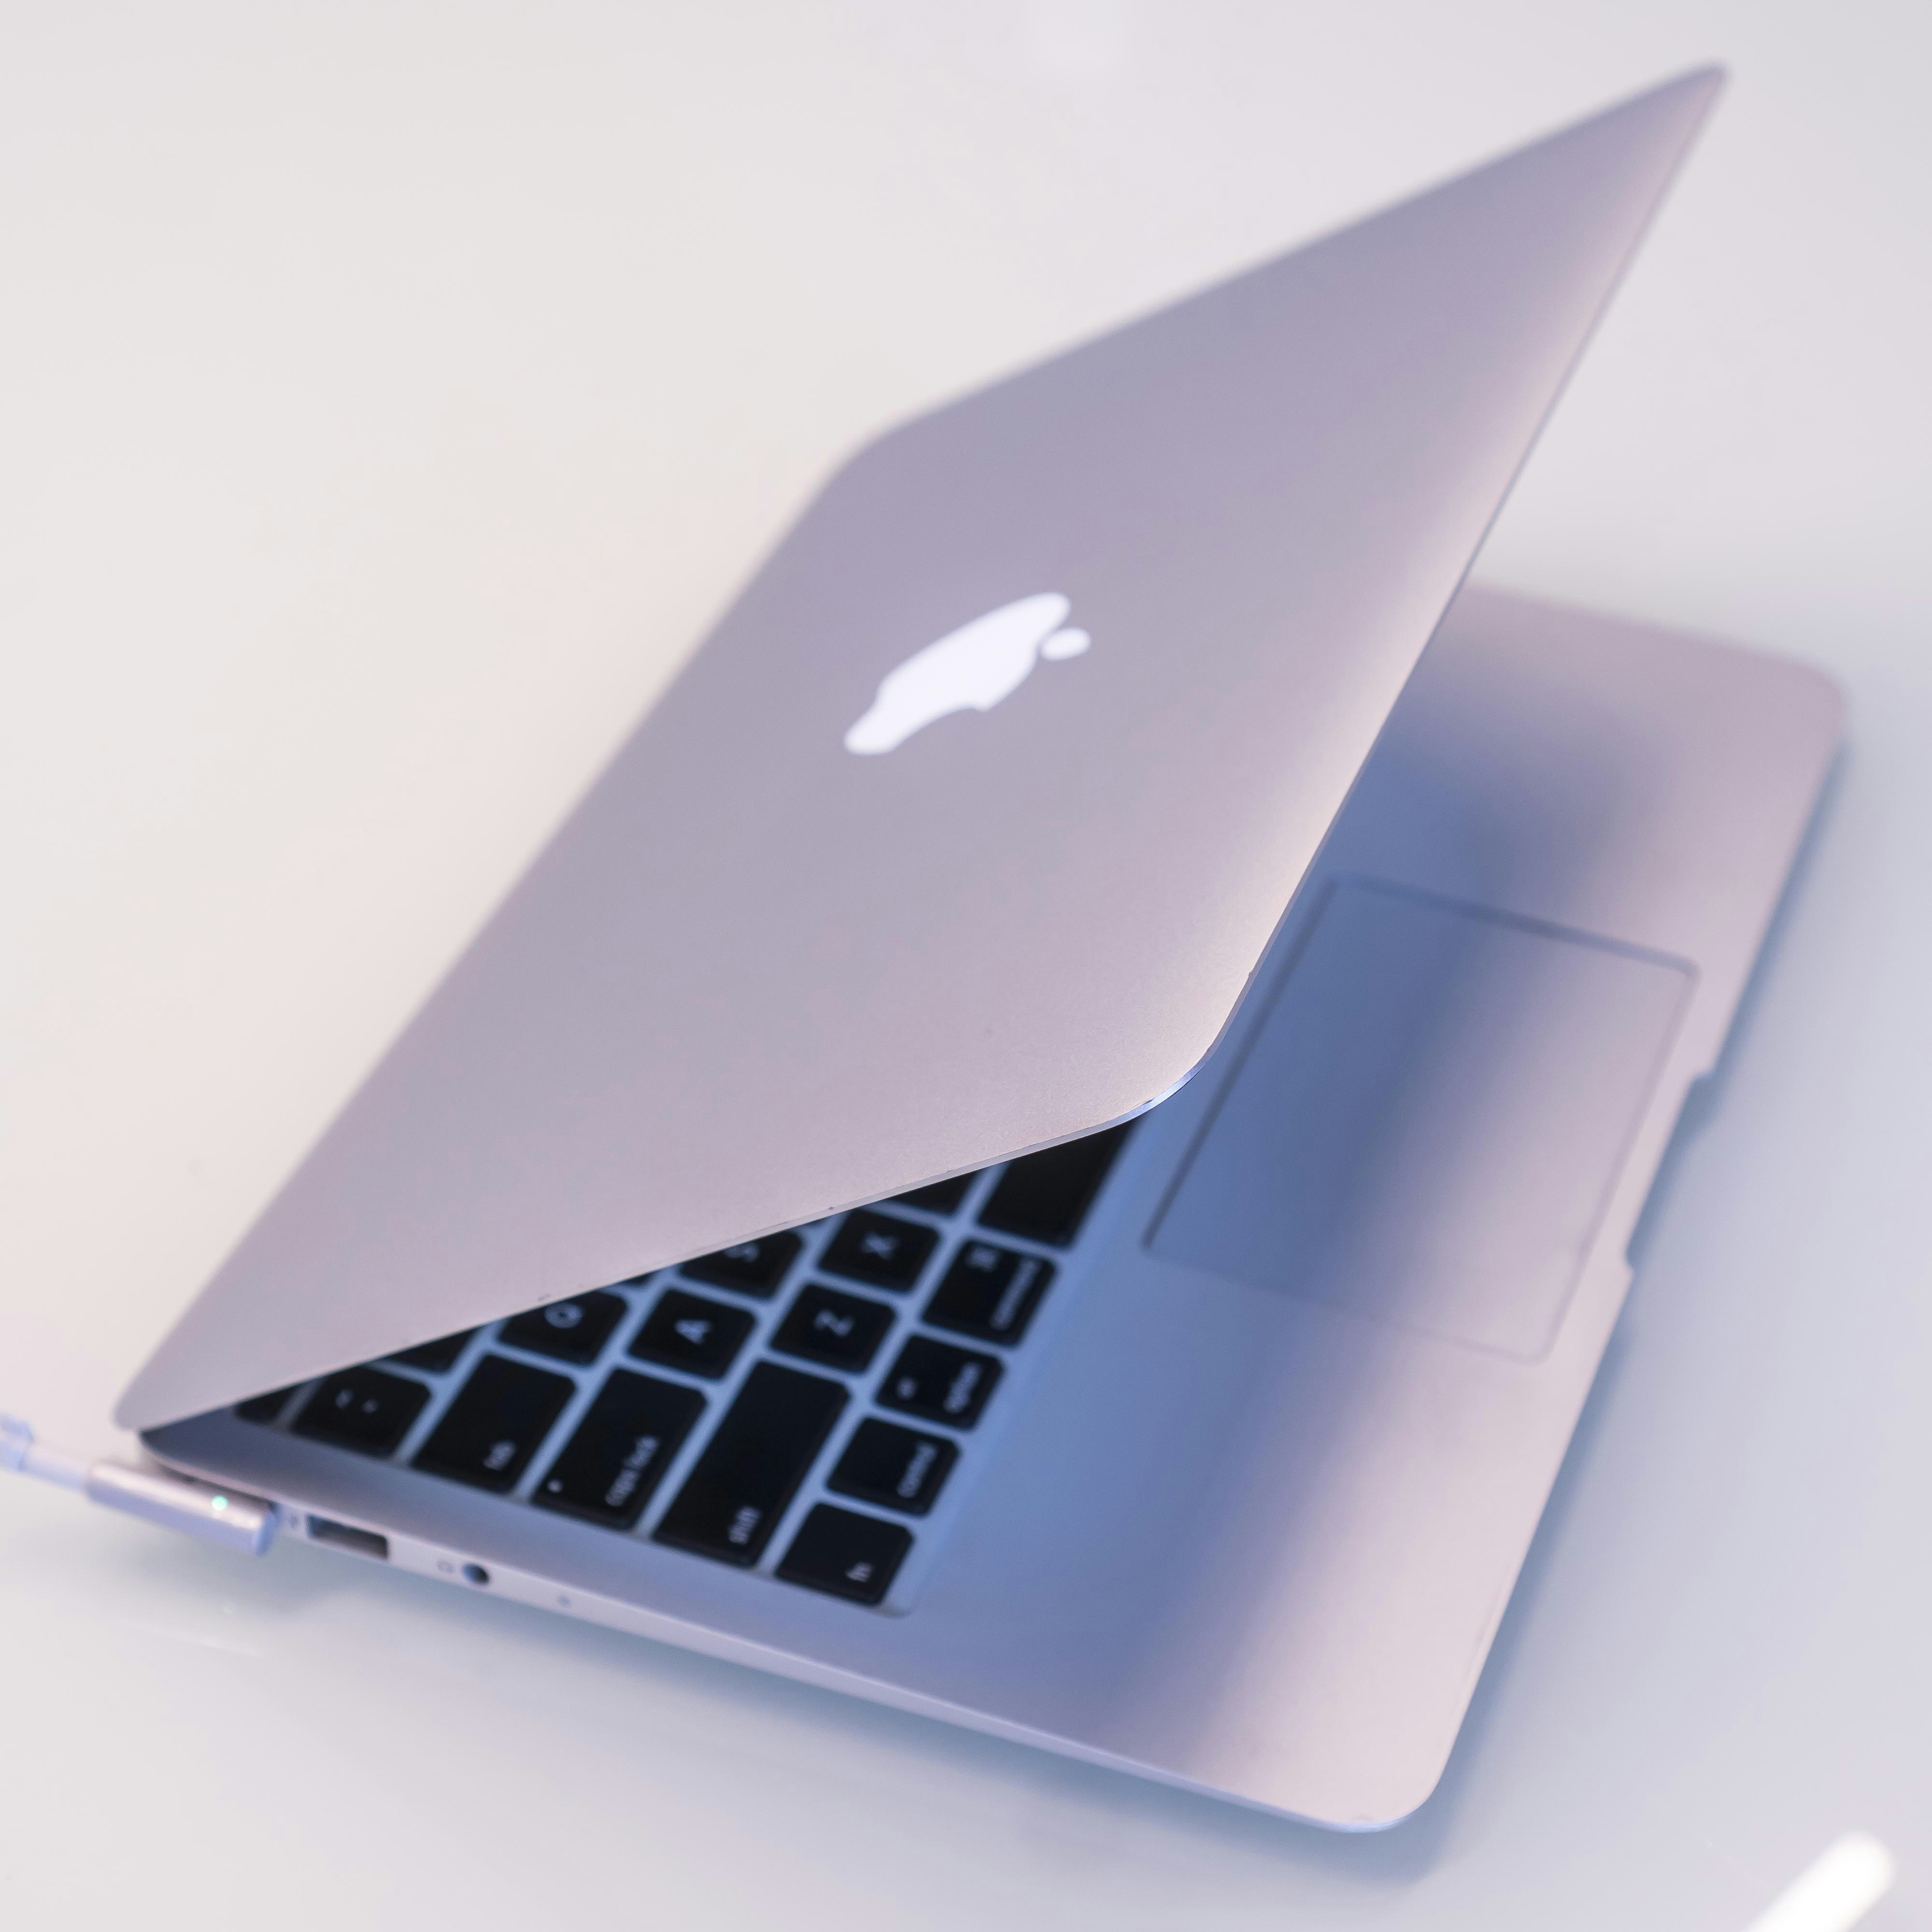 2022 MacBook Air rumors: New design and colors, white bezels, mini-LED -  9to5Mac